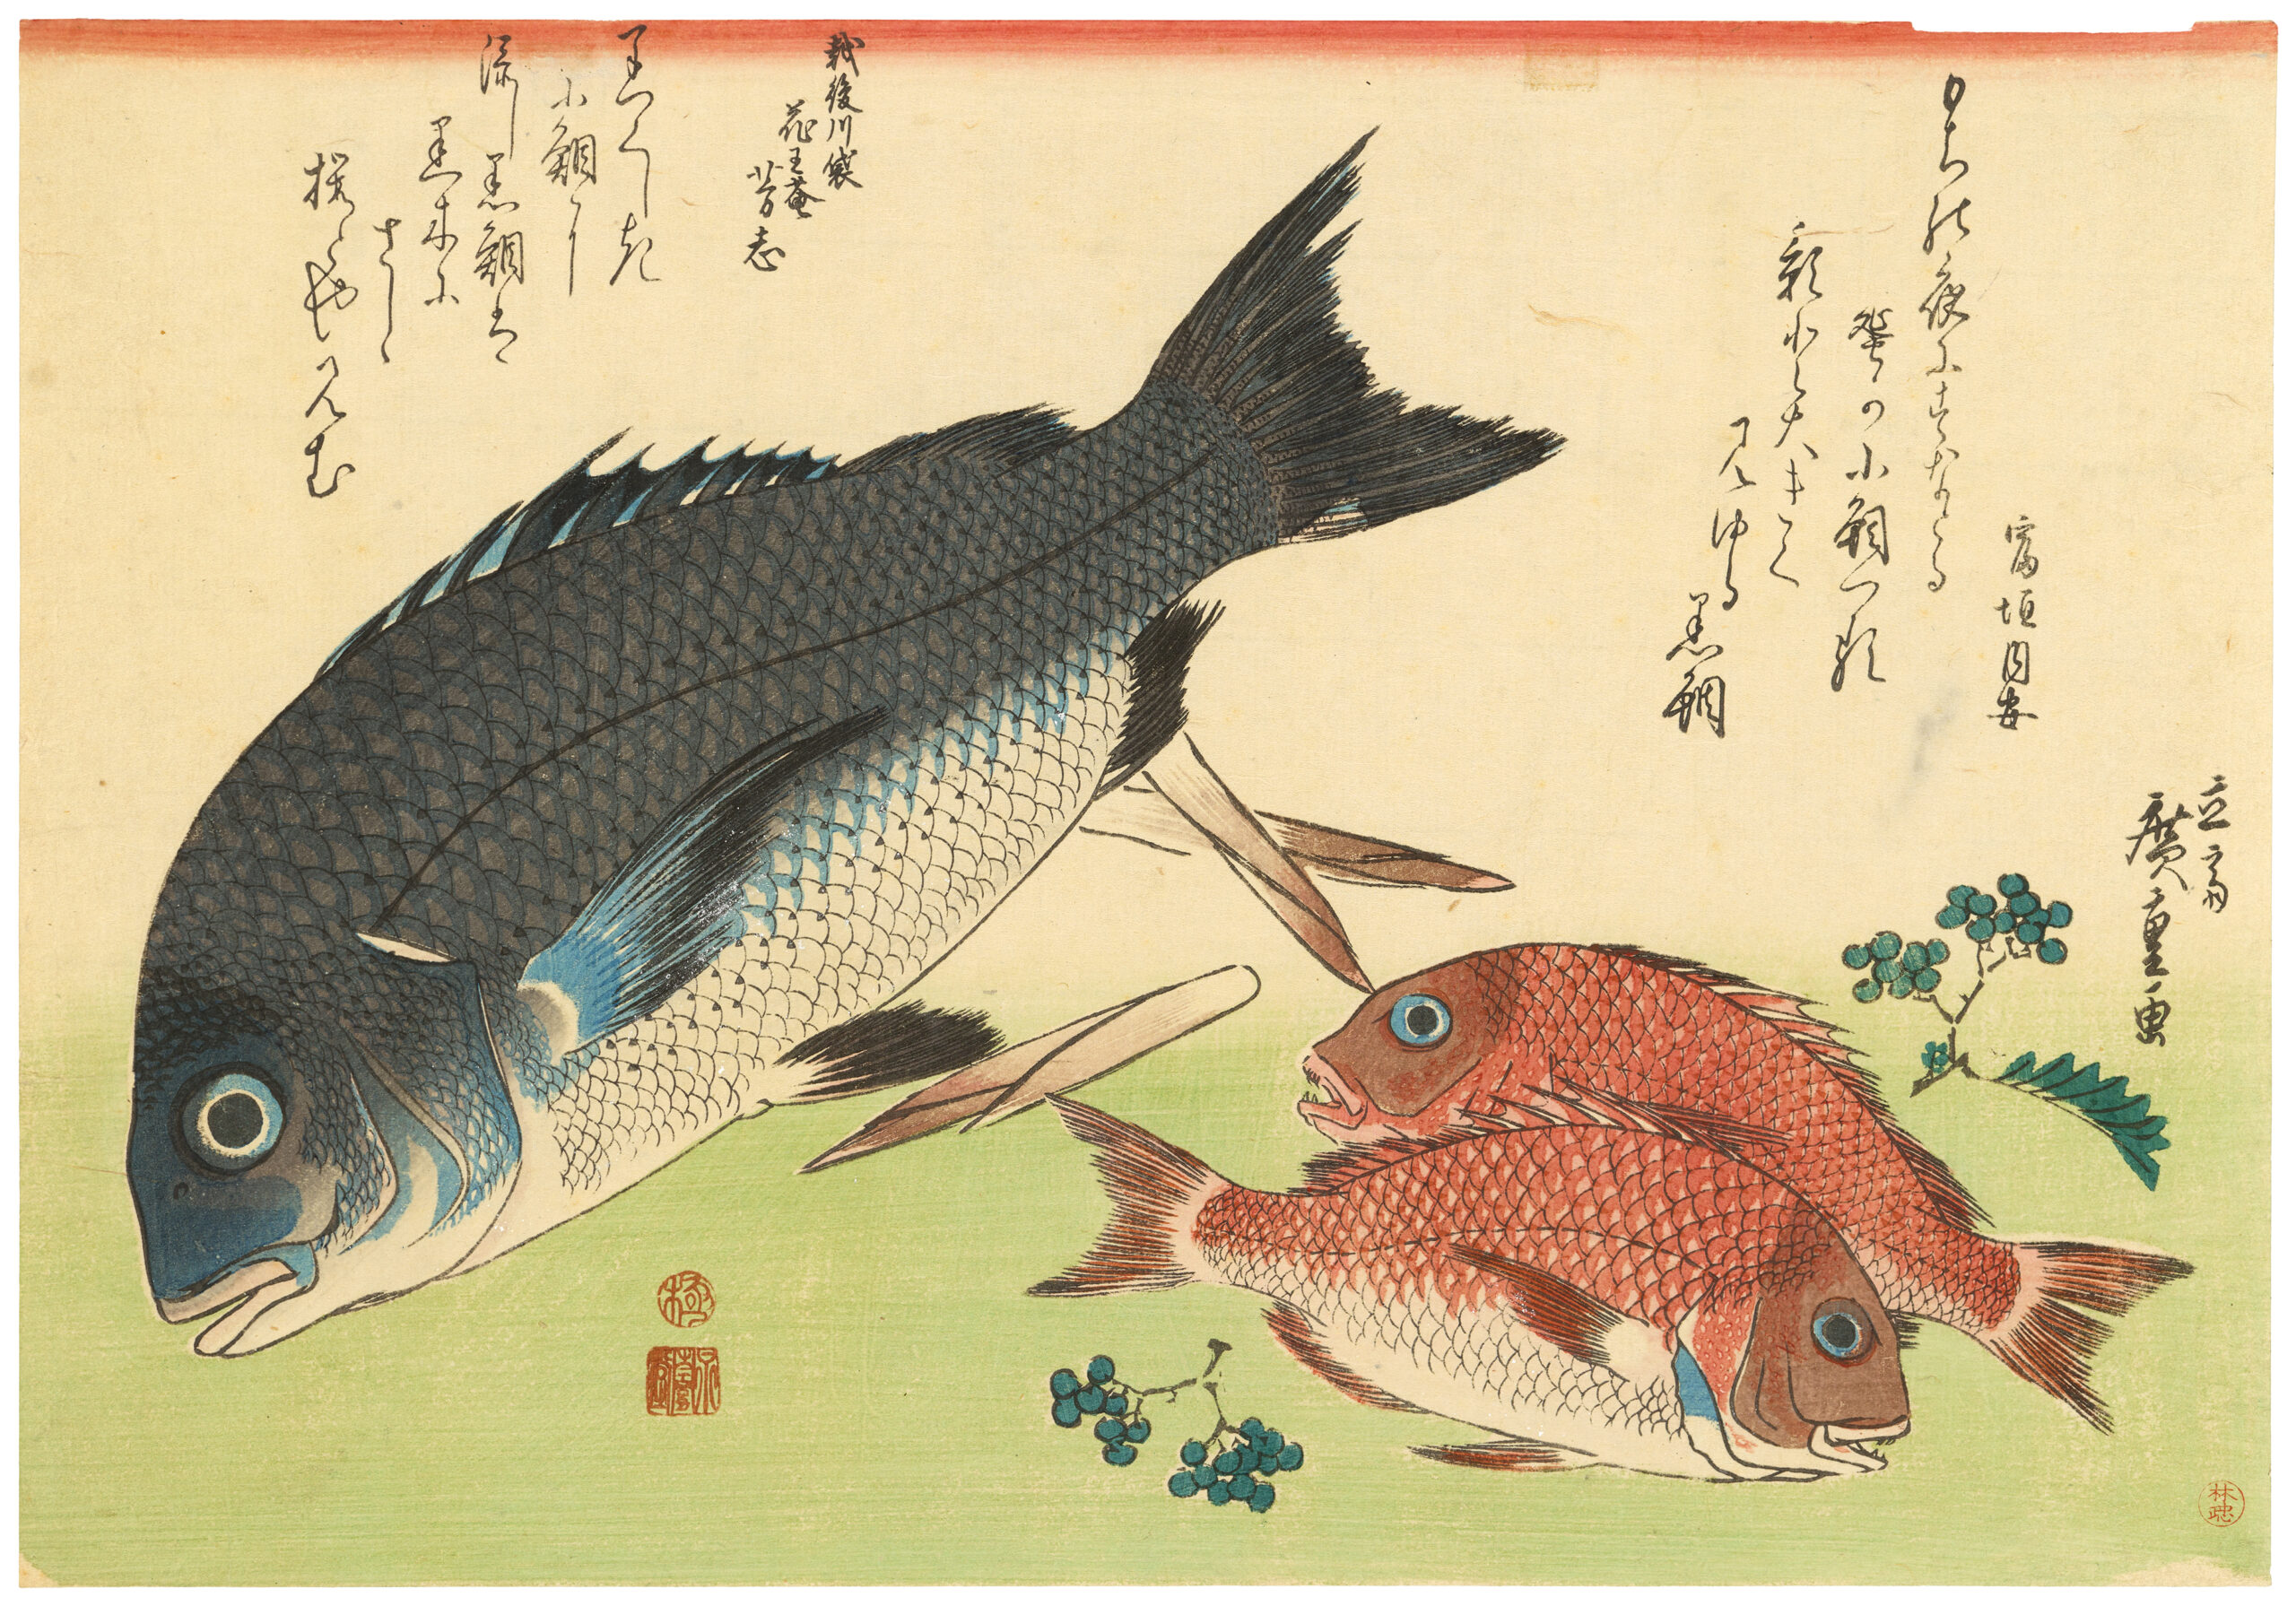 Utagawa Hiroshige (1797-1858), 'Black Sea Bream, Small Sea Bream, Asparagus Shoots and Sansho Pepper', from the Untitled Series of Large Fish, woodblock print, circa 1832-33, 25.4 x 36.5cm.